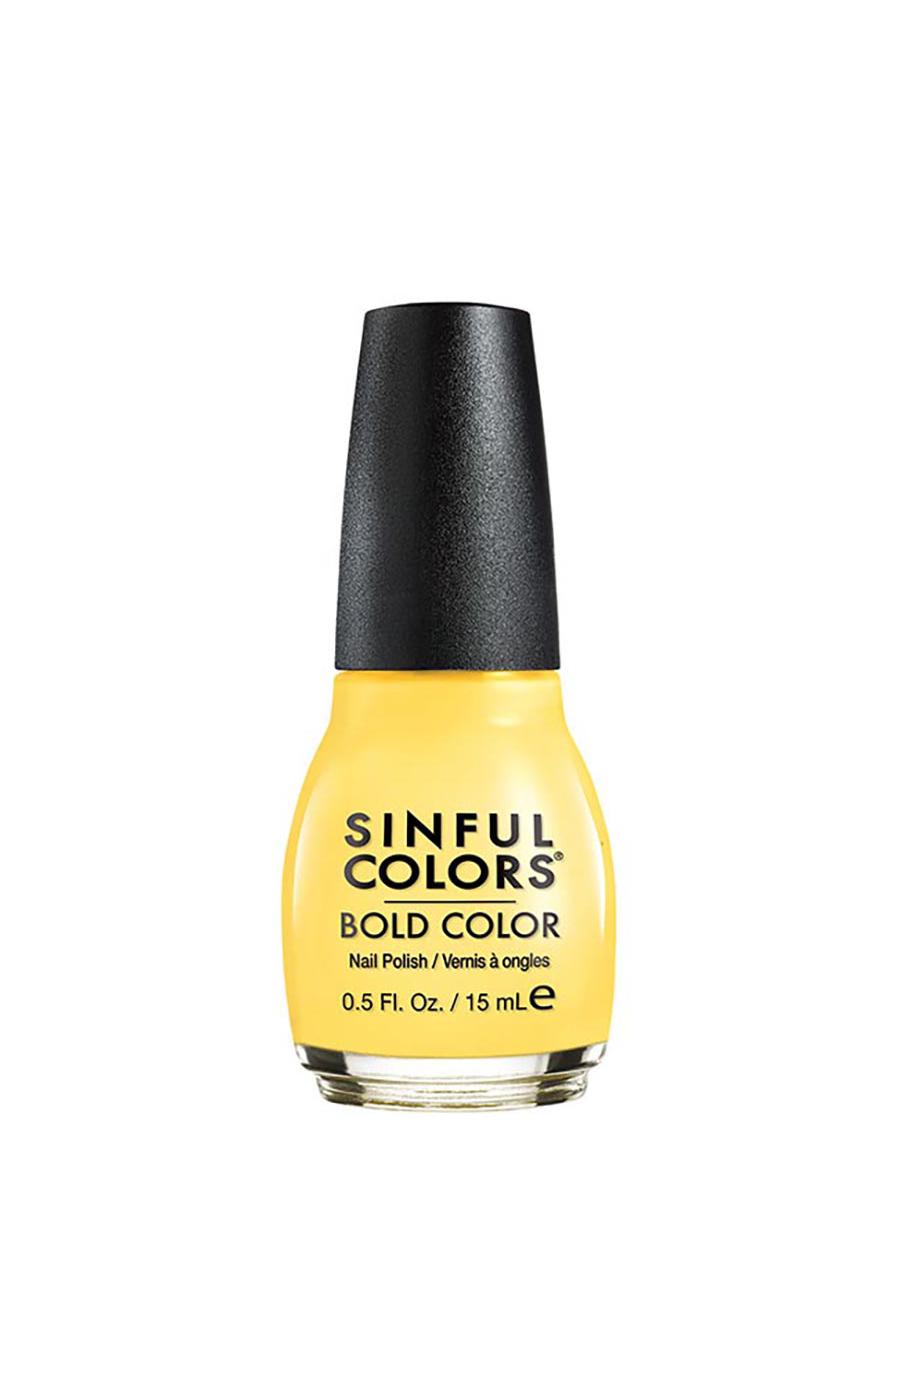 Sinful Colors Bold Color Nail Polish - Yolo Yellow; image 1 of 2